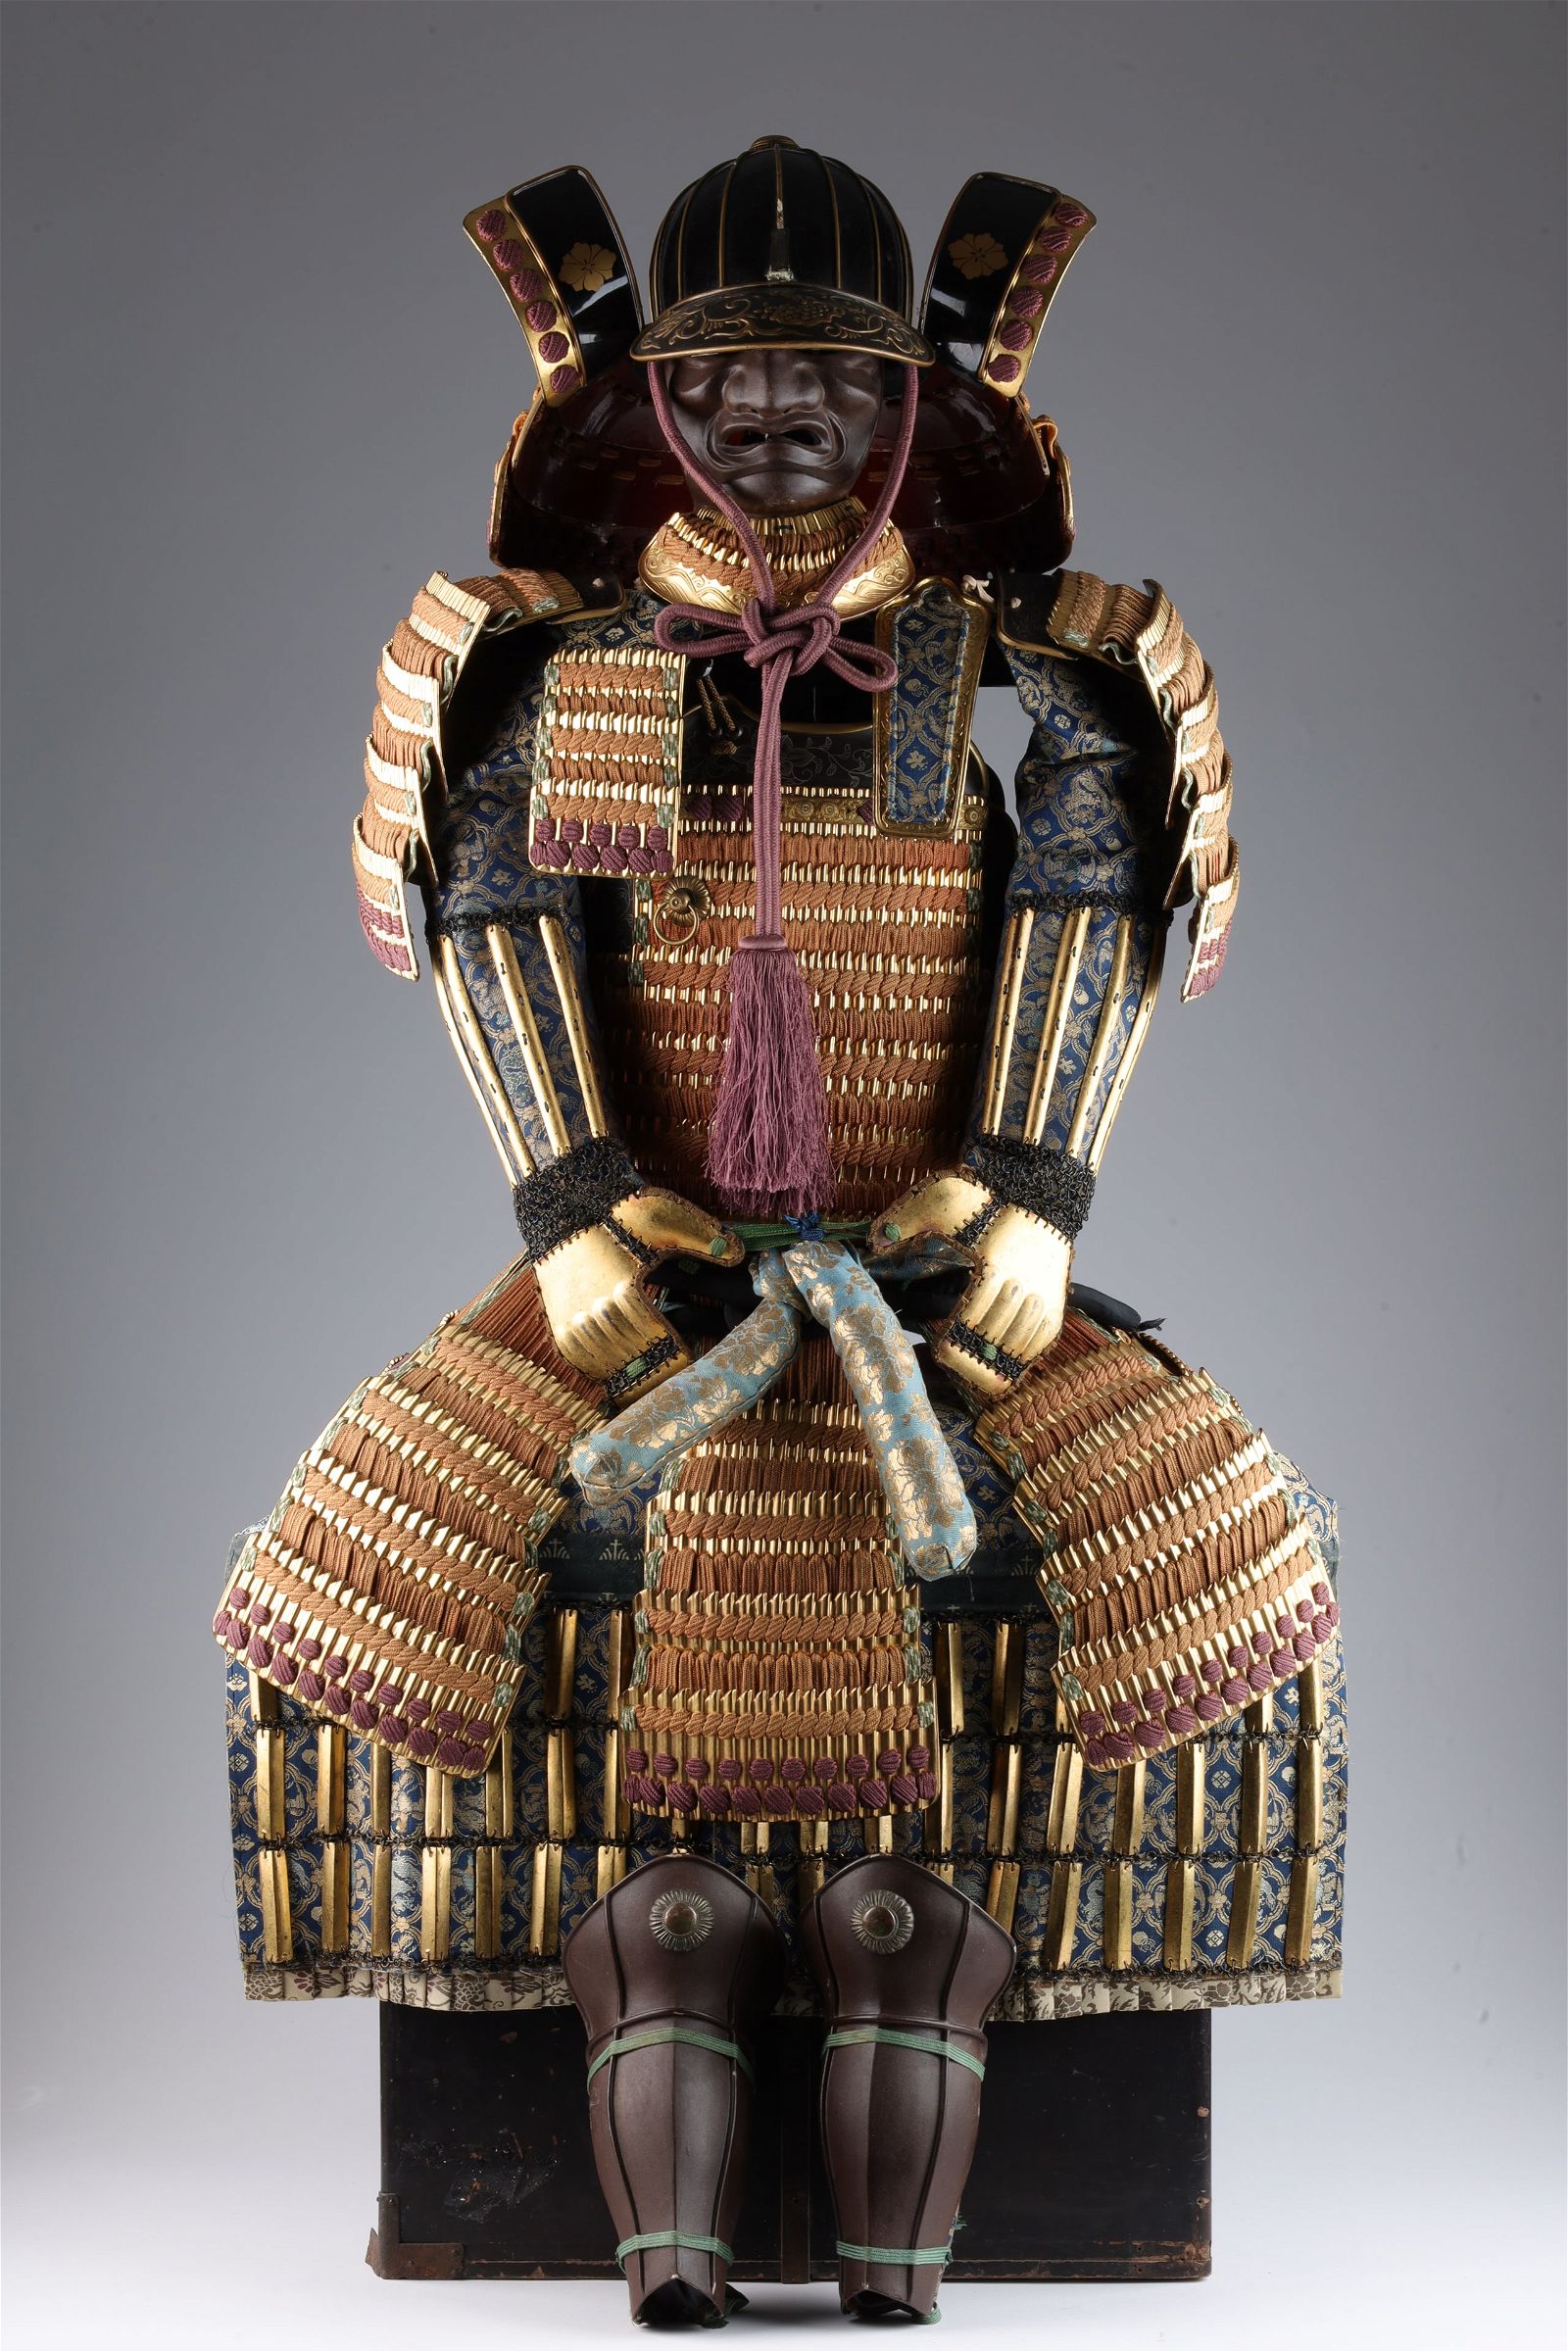 Samurai armor designed for a child turns heads at Kavanagh Feb. 24